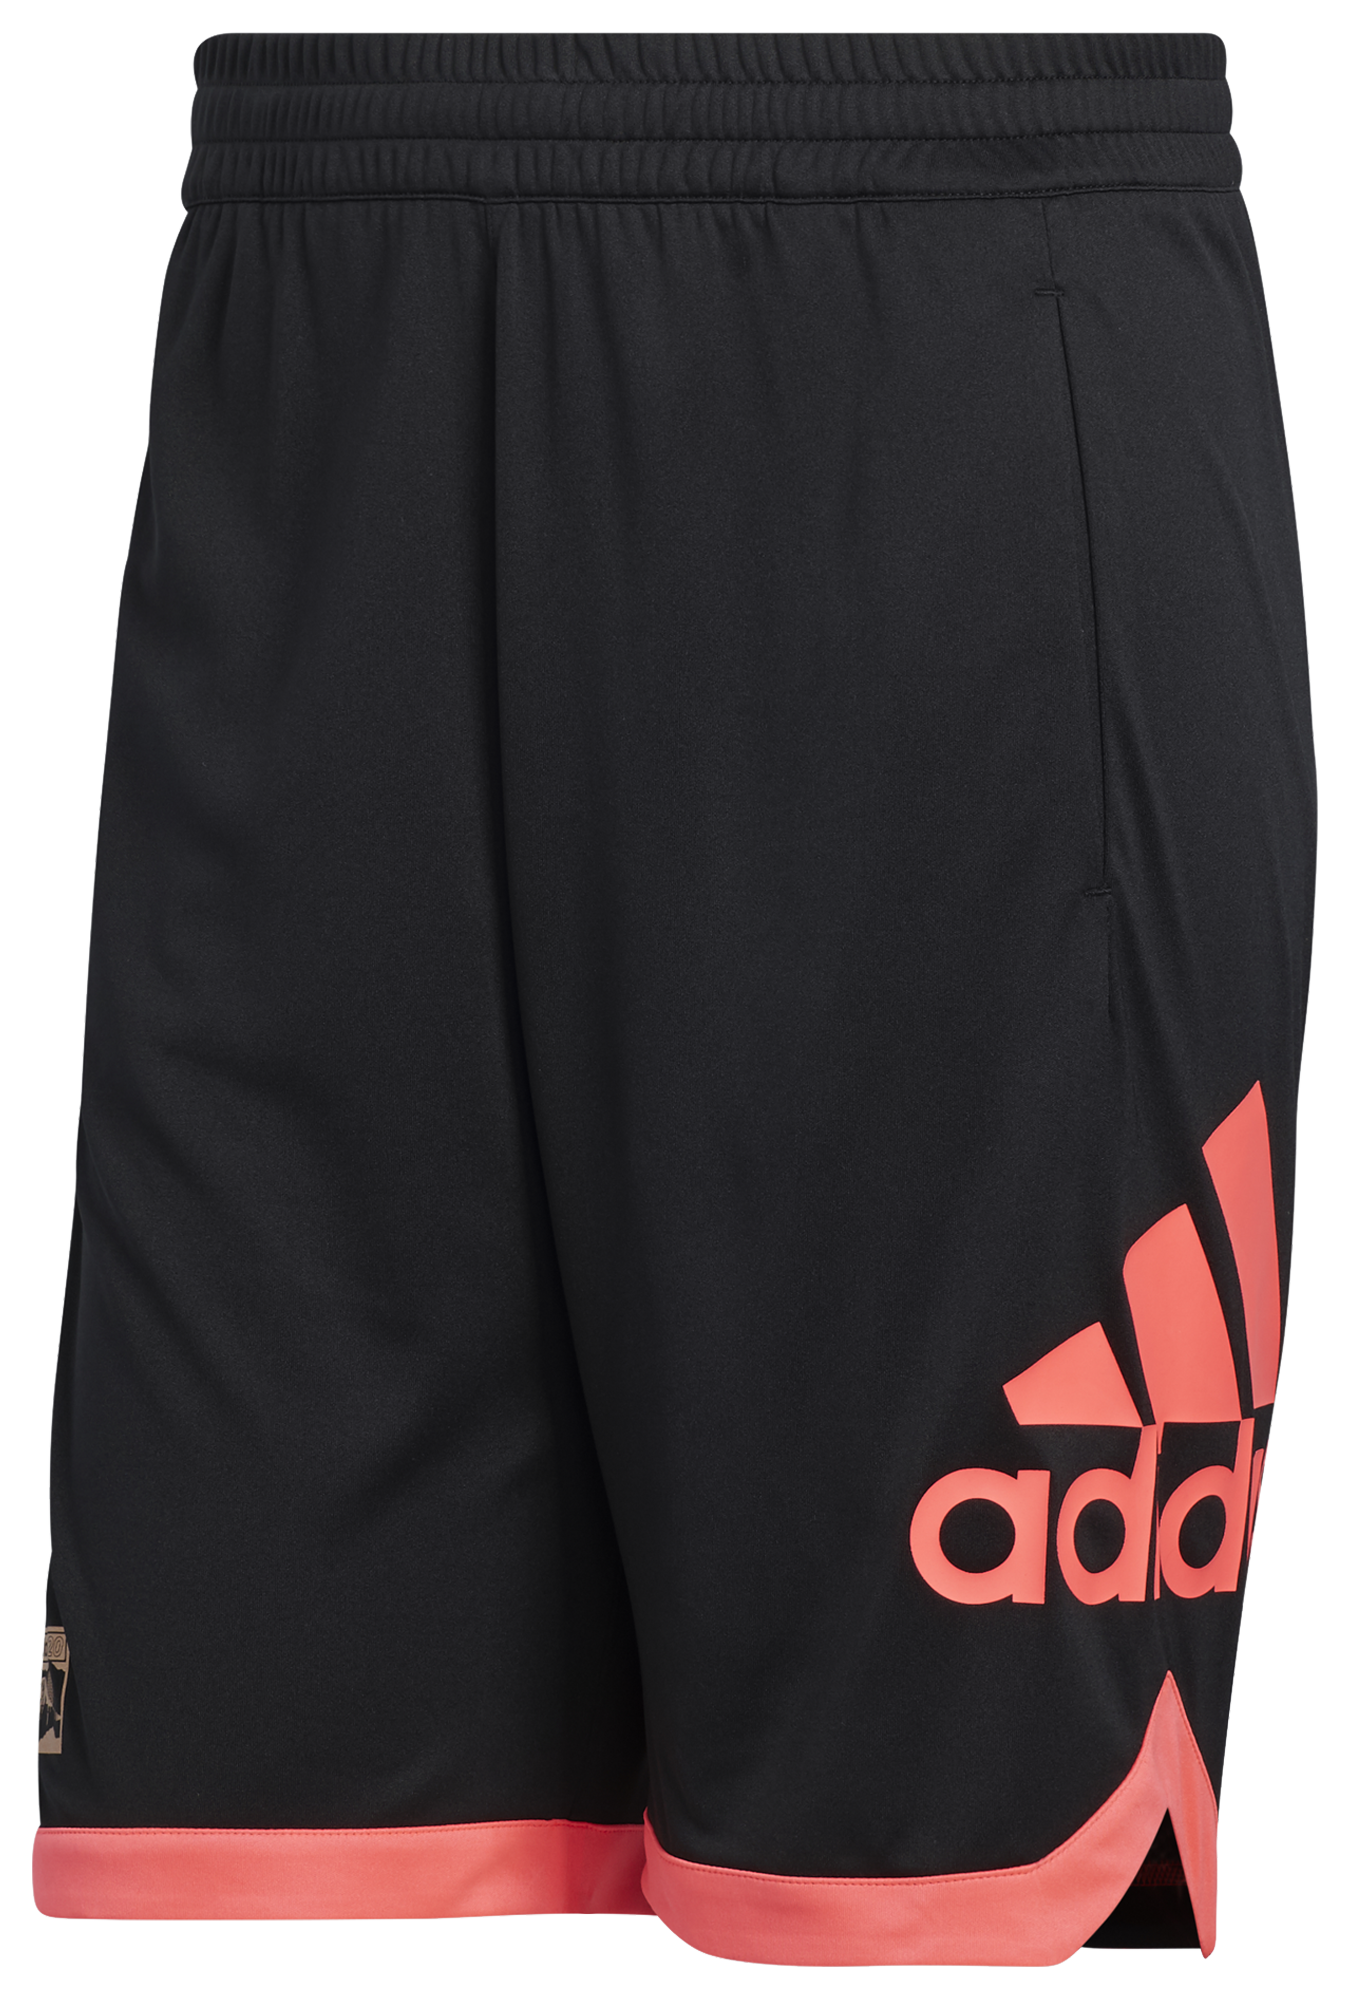 adidas basketball shorts sale